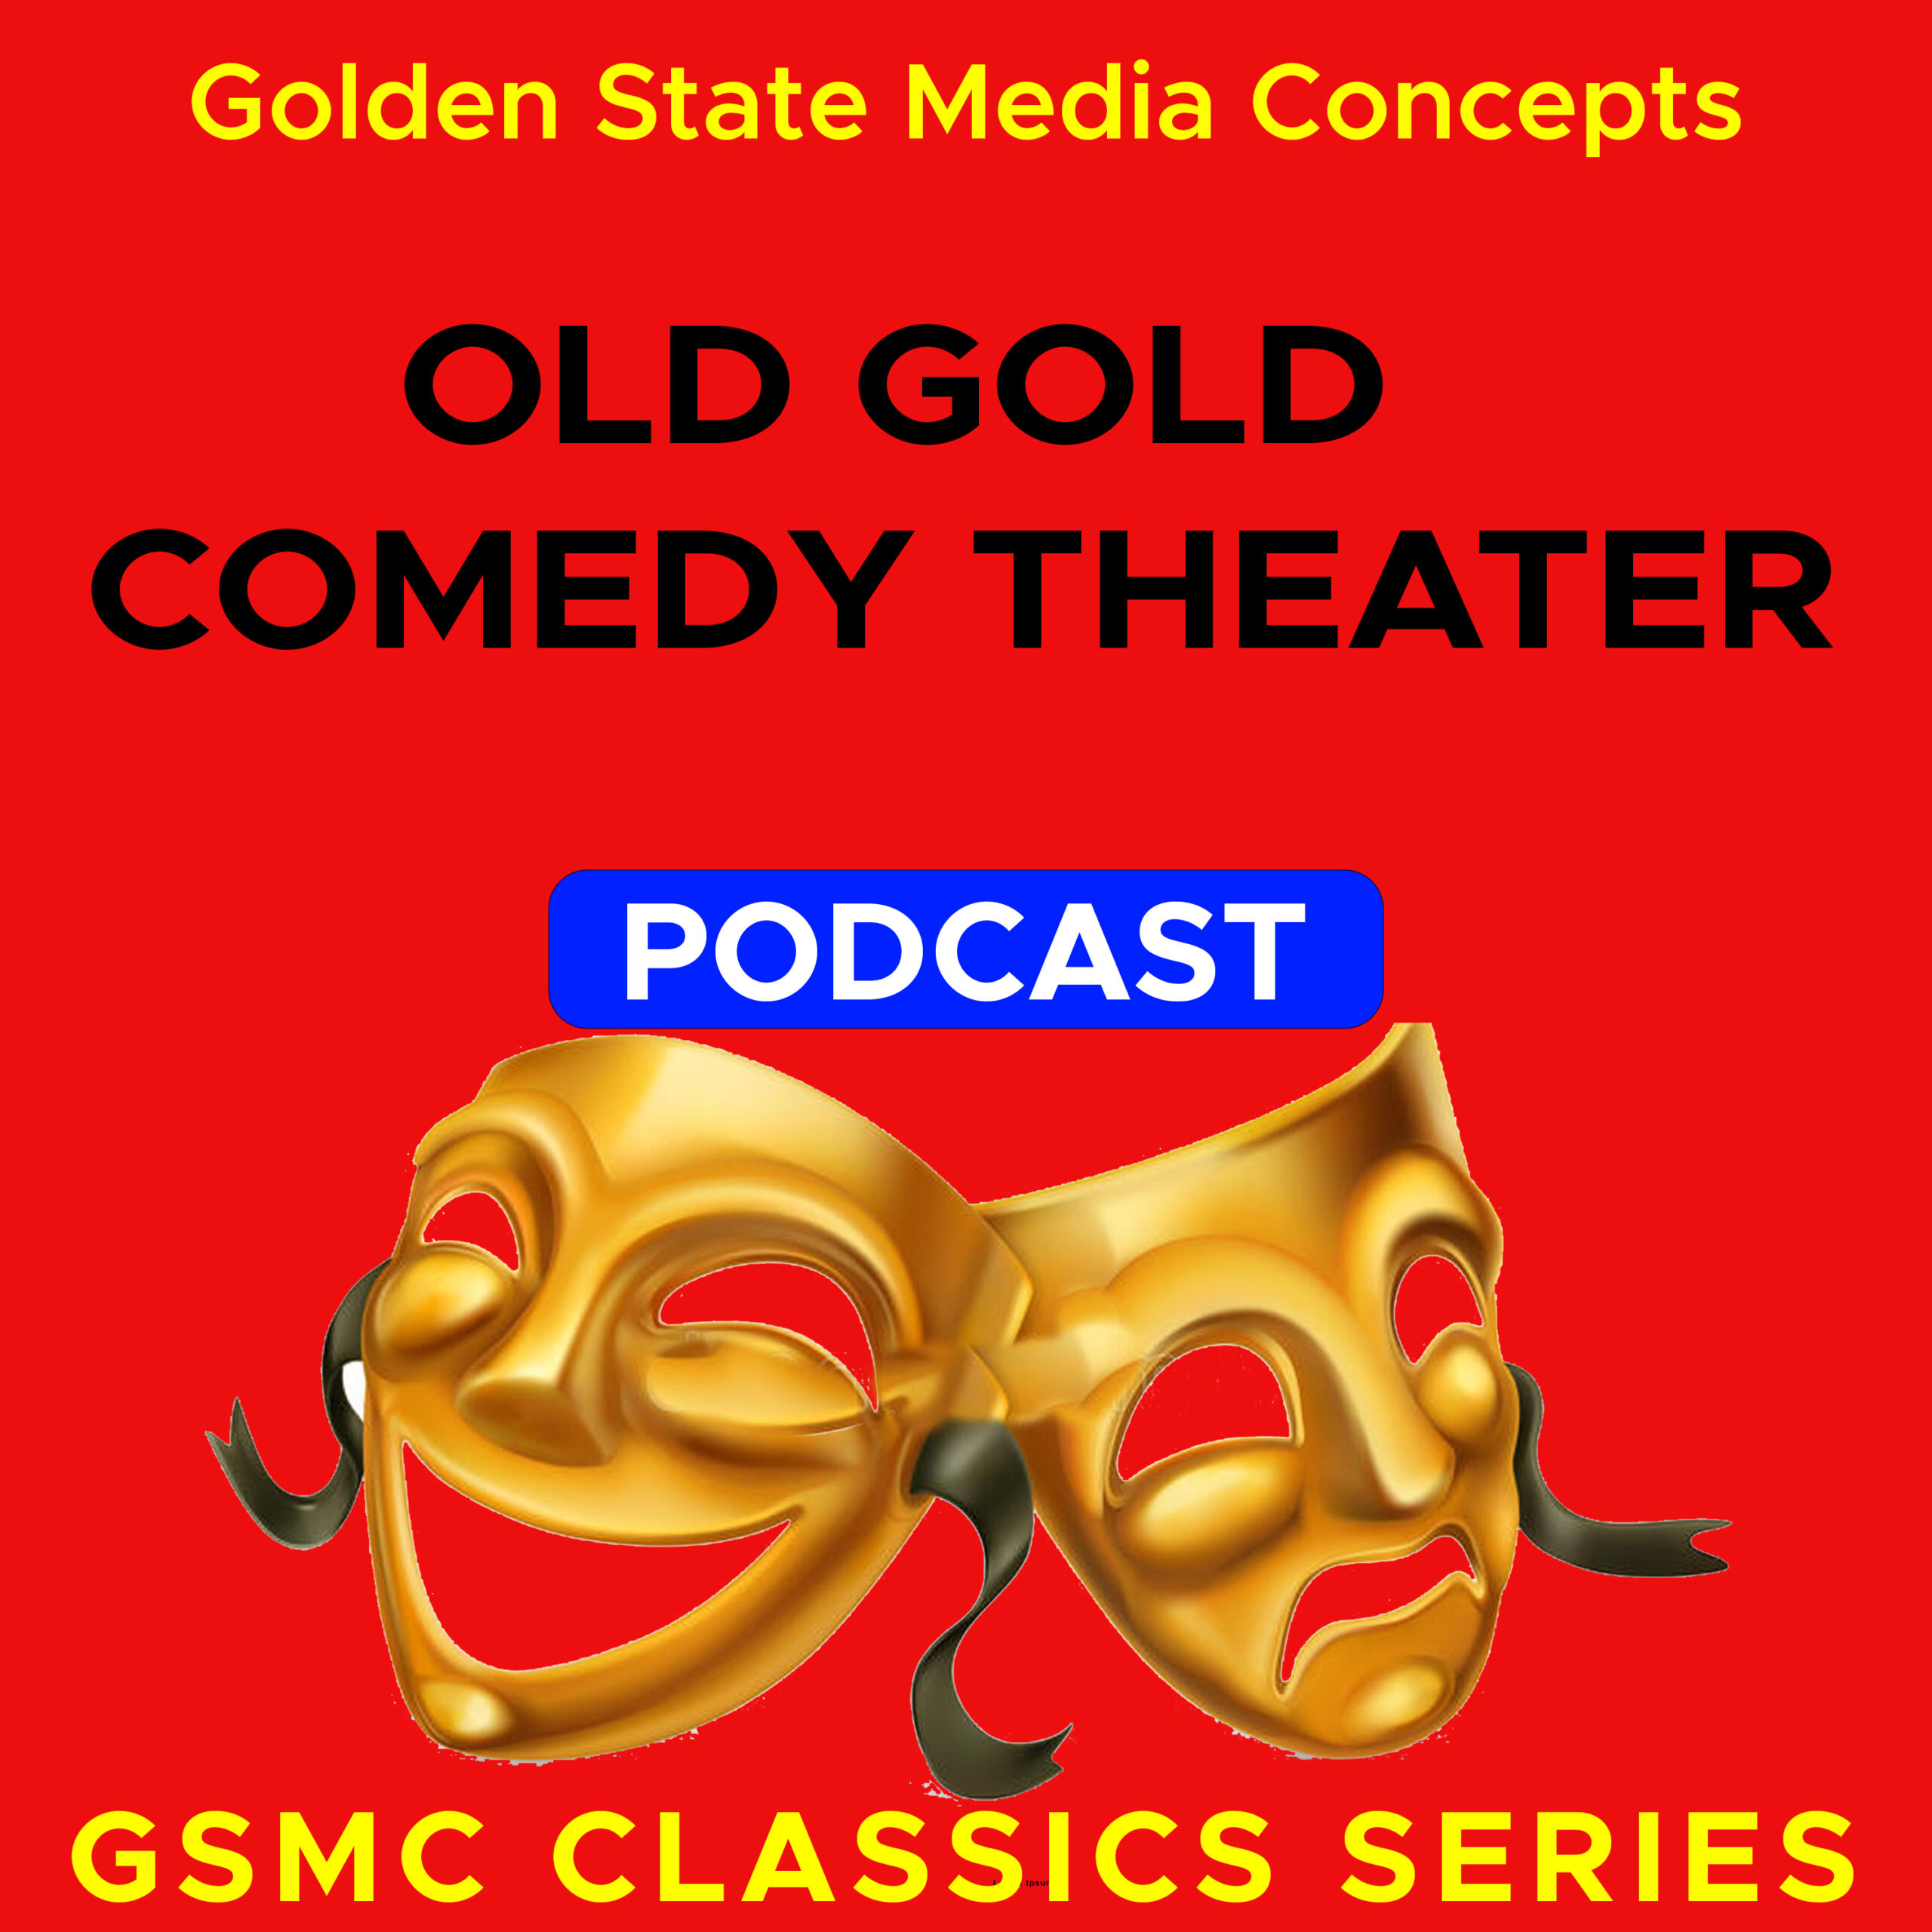 GSMC Classics: Old Gold Comedy Theater